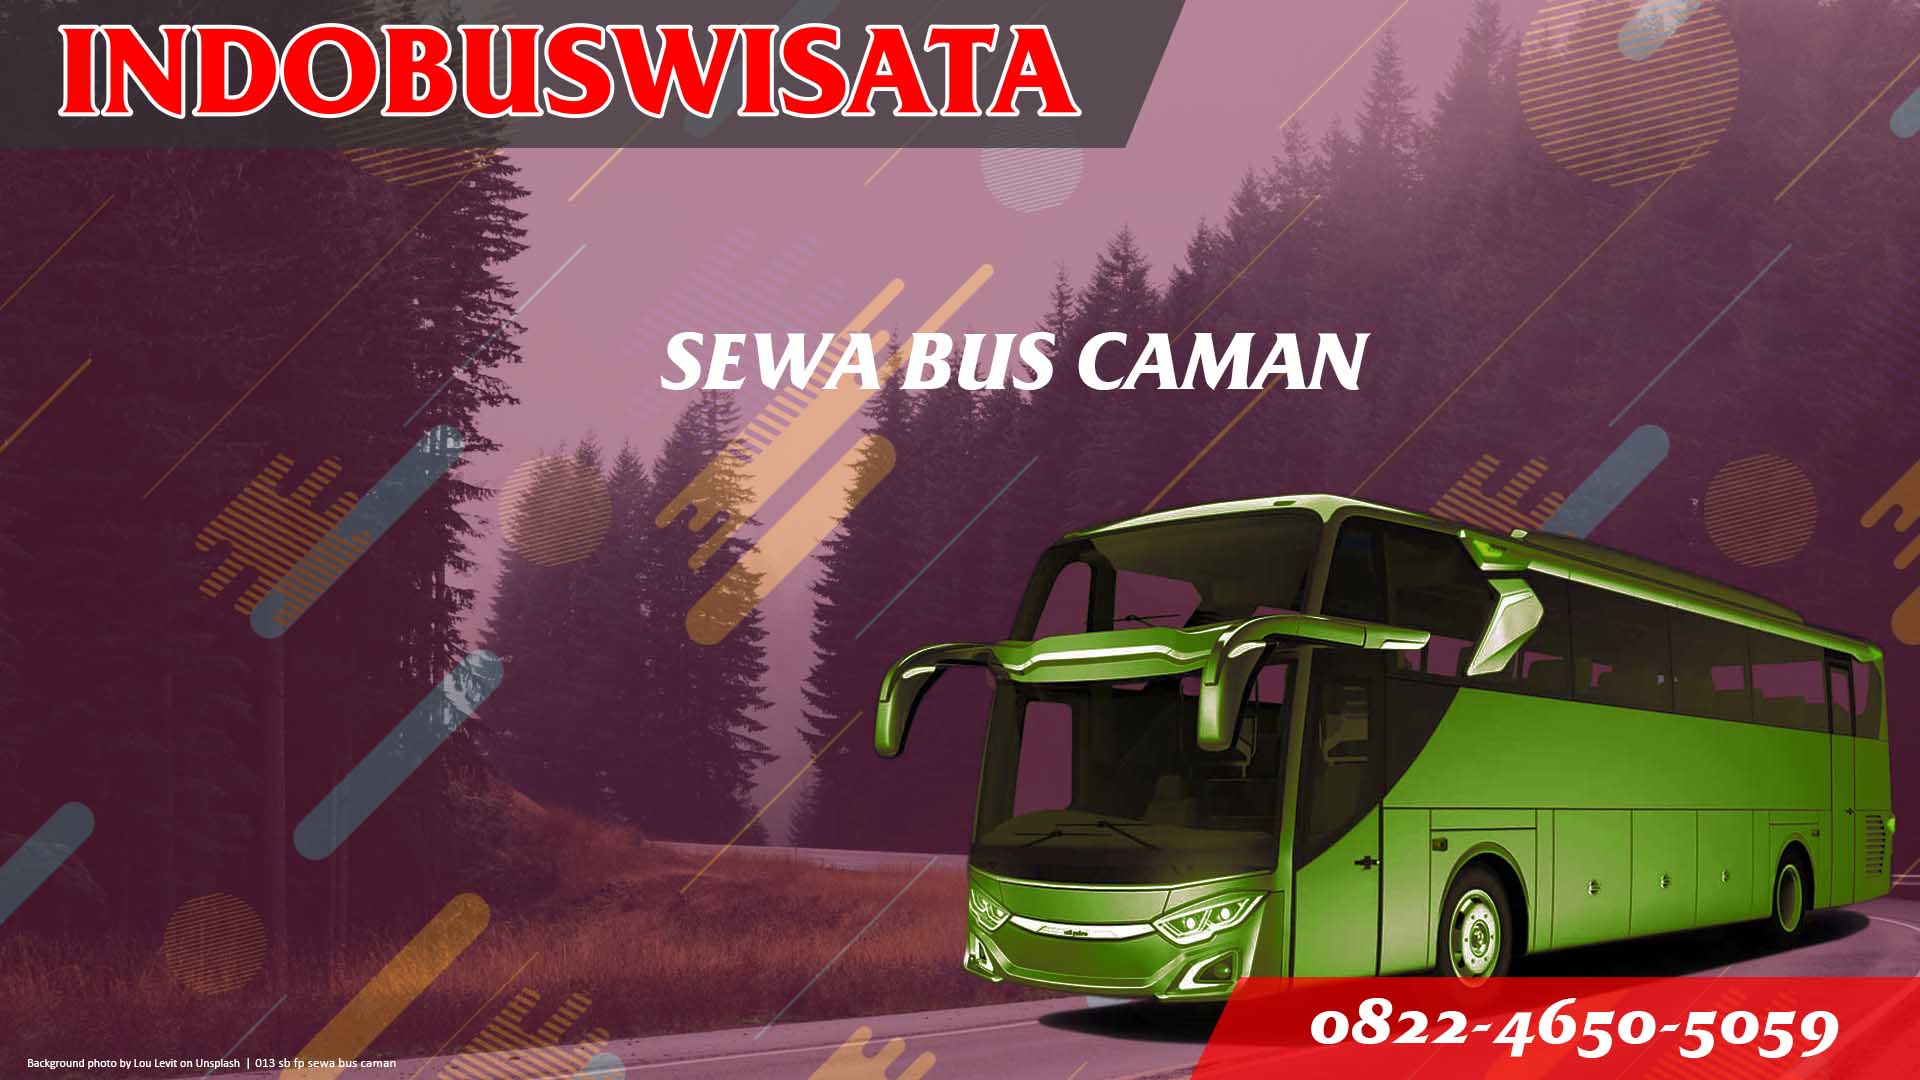 013 Sb Fp Sewa Bus Caman Jb 3 Hdd Indobuswisata